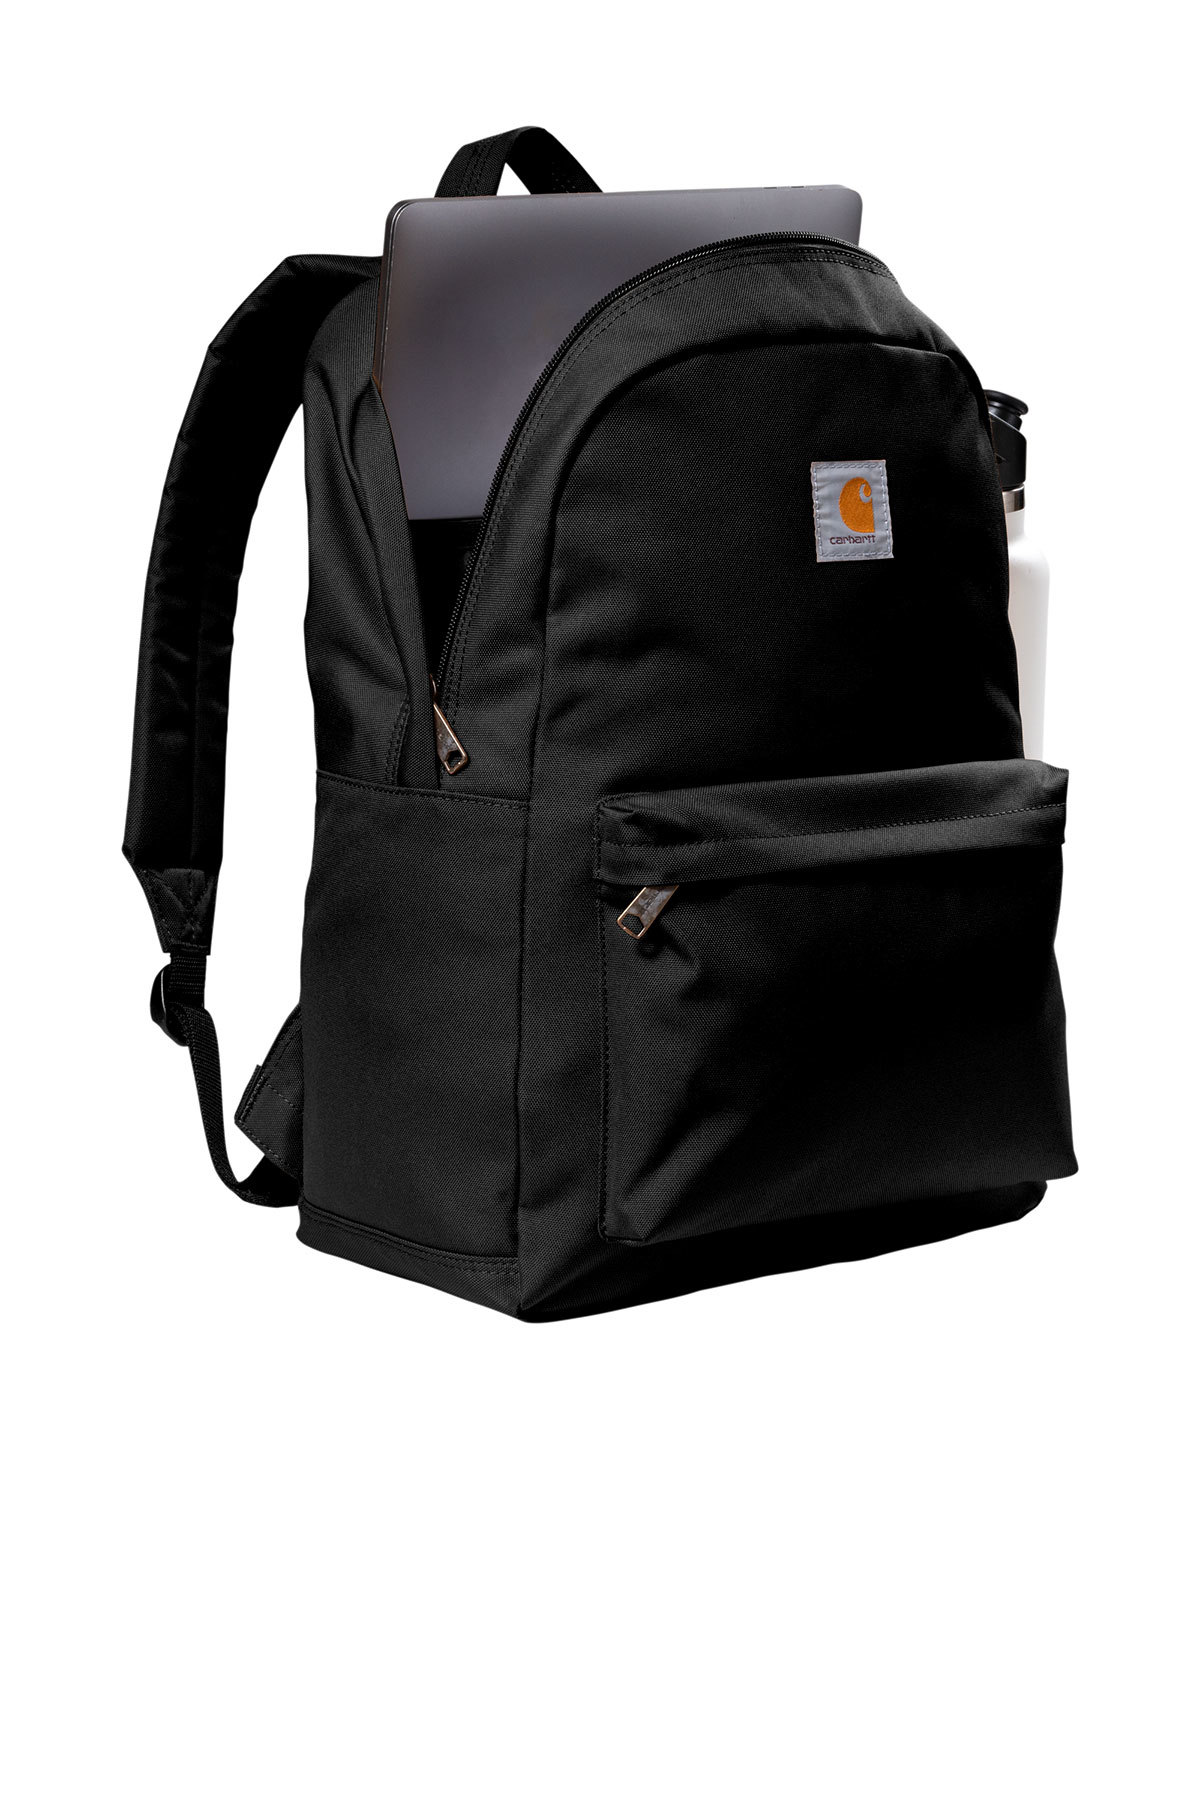 Rucksack For School or Work BG0001 Dickies Creston Bag Black Backpack 